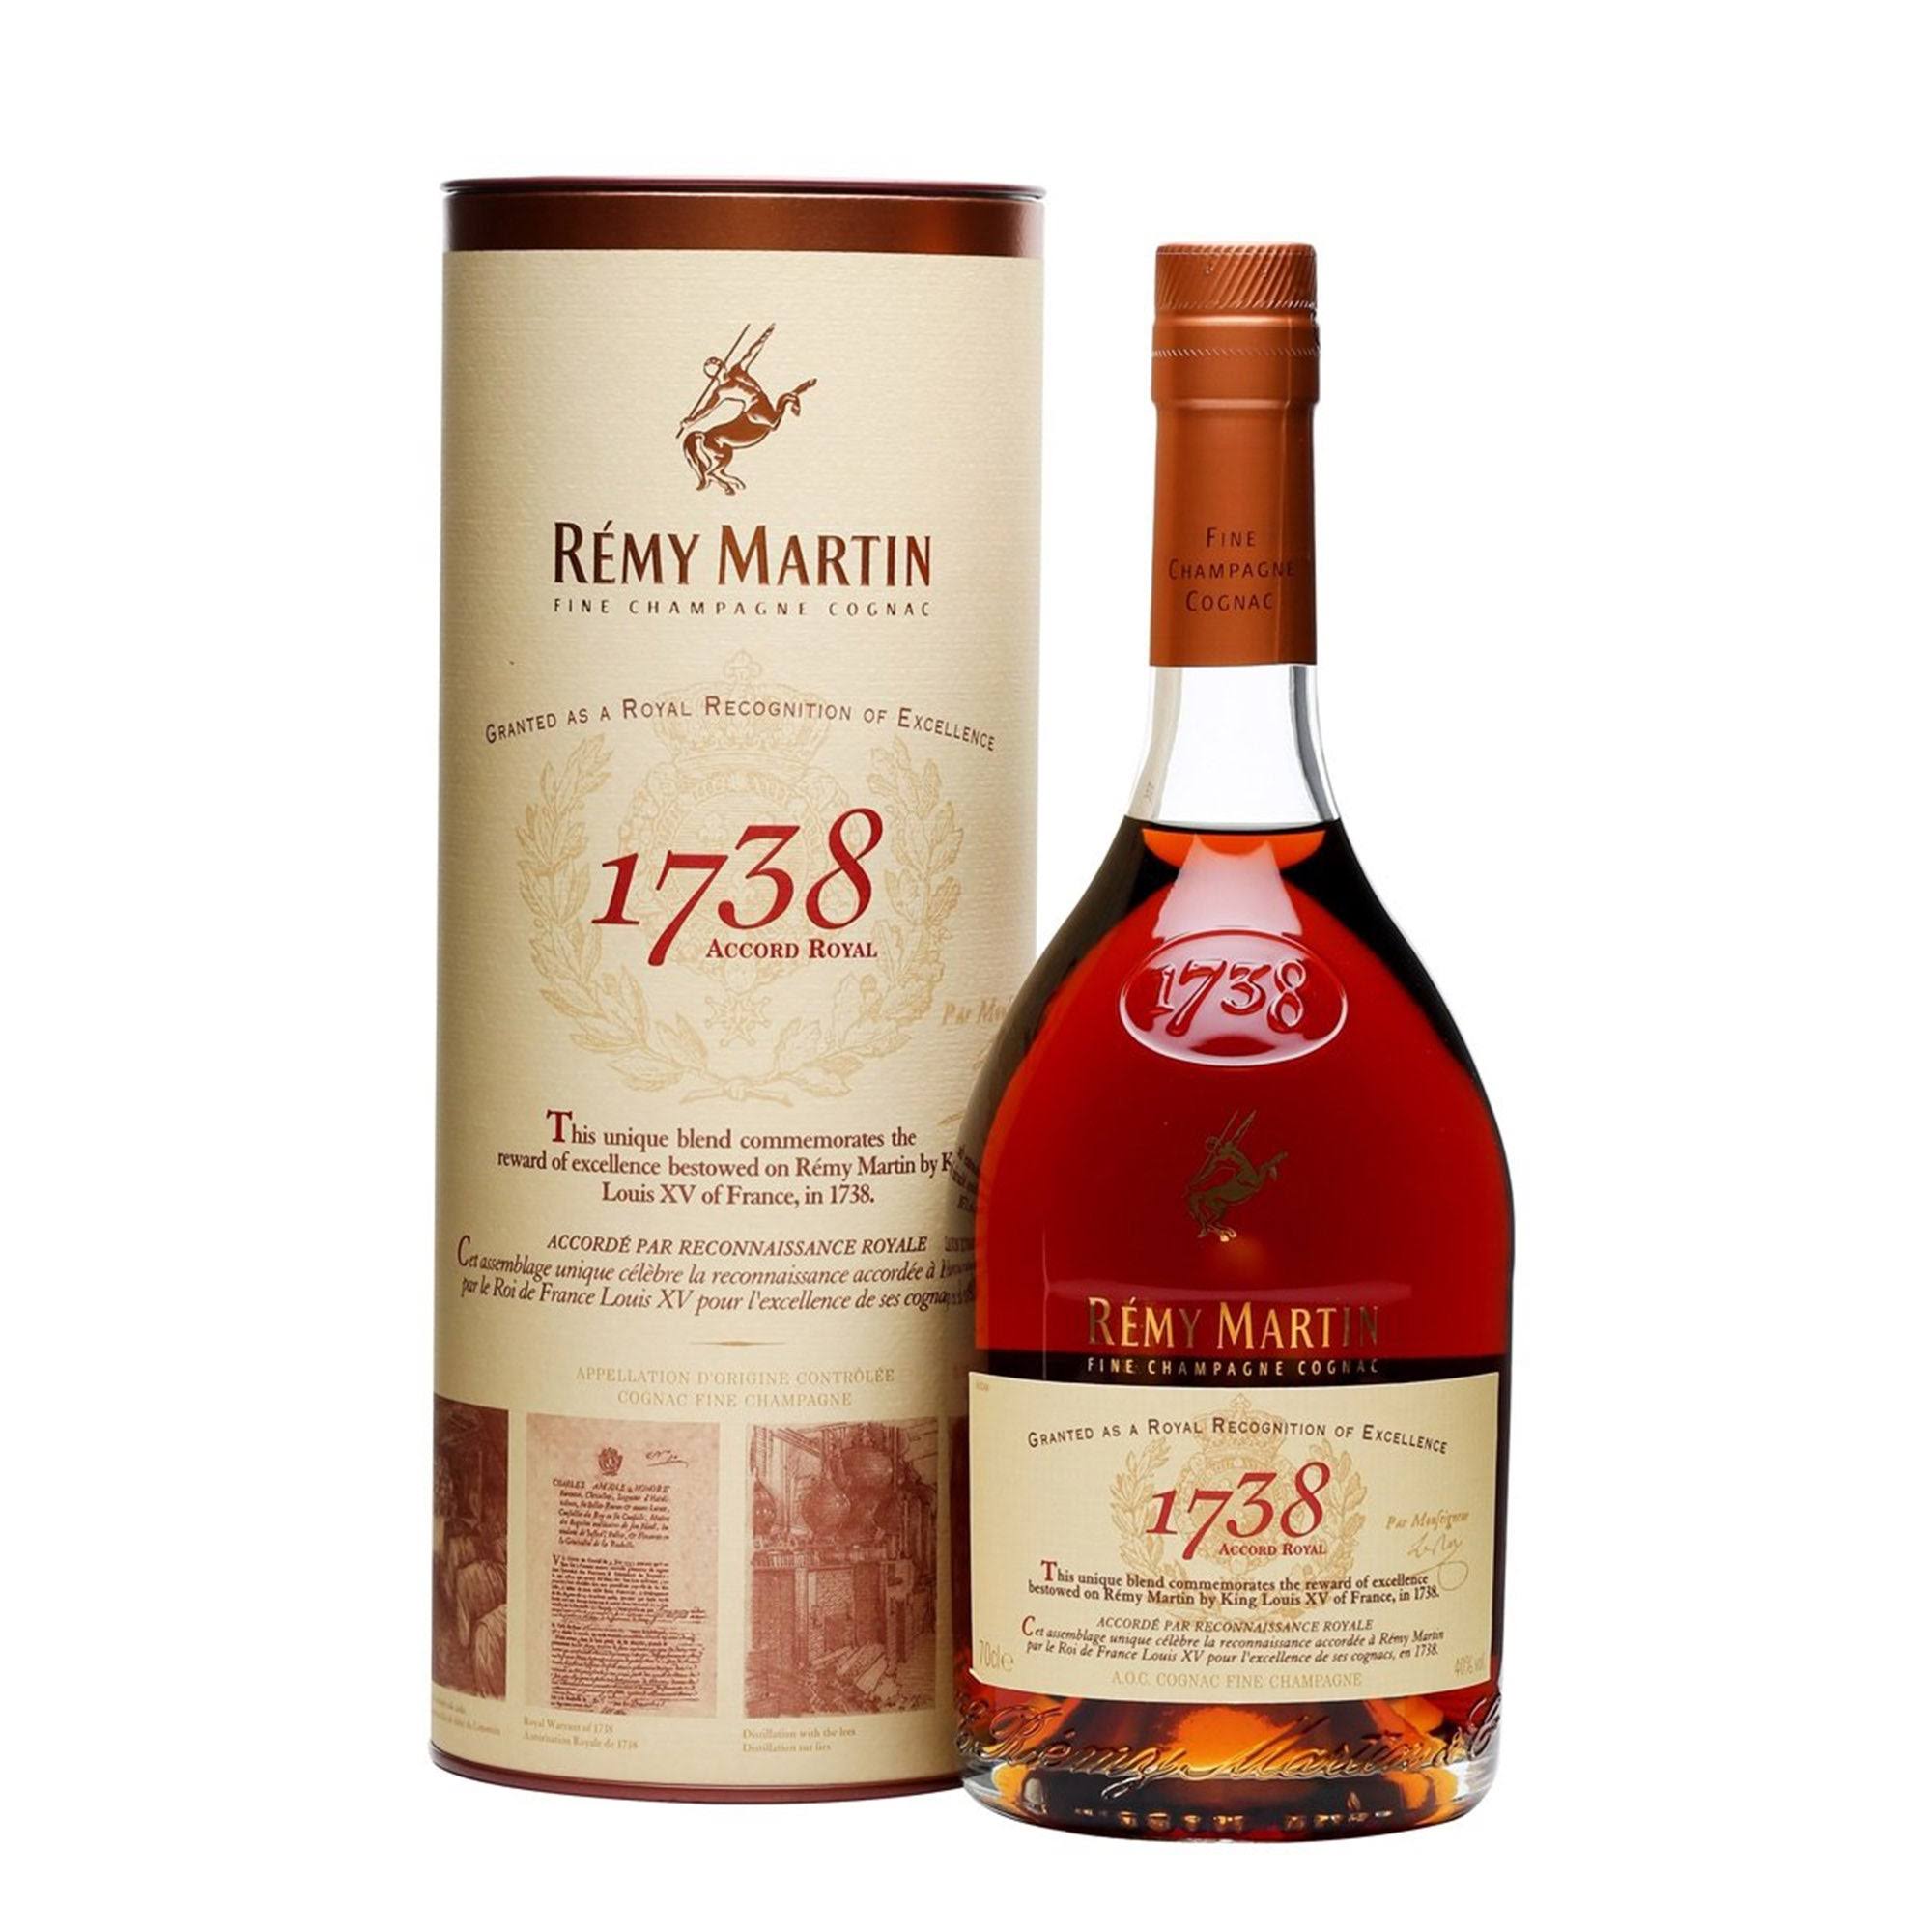 Remy Martin 1738 Cognac 750ml